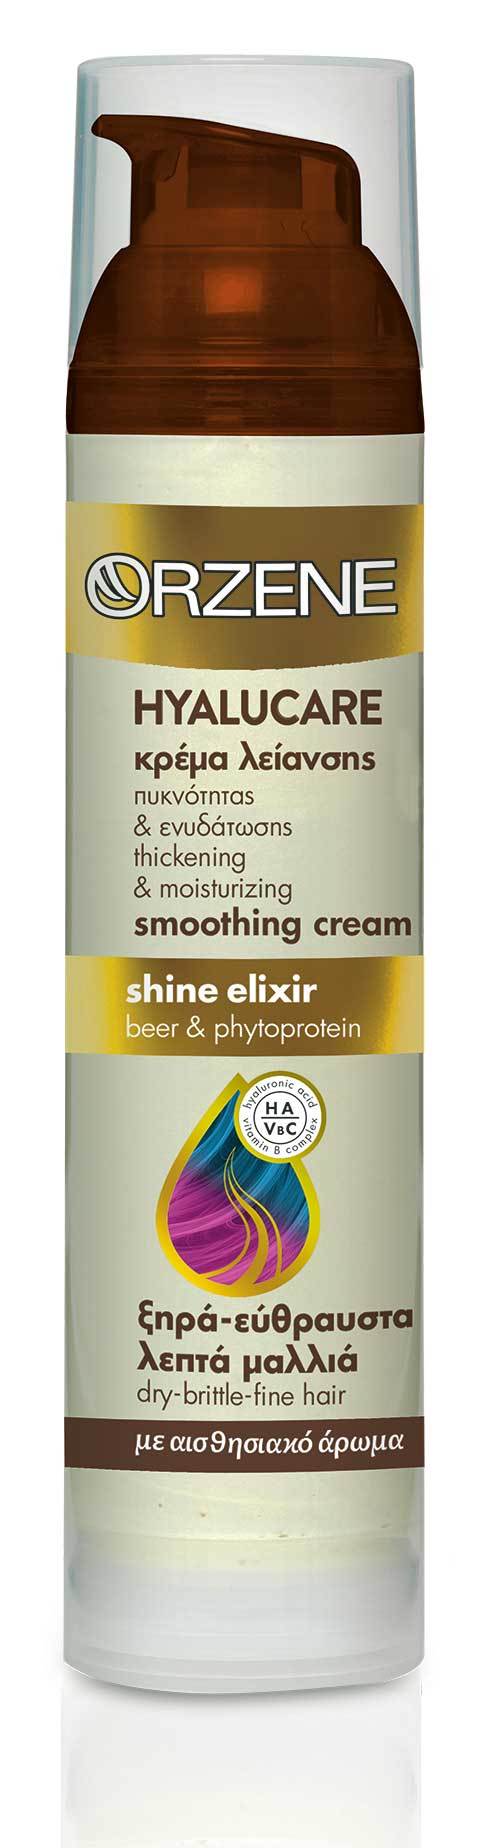 Hyalucare smoothing cream 100ml